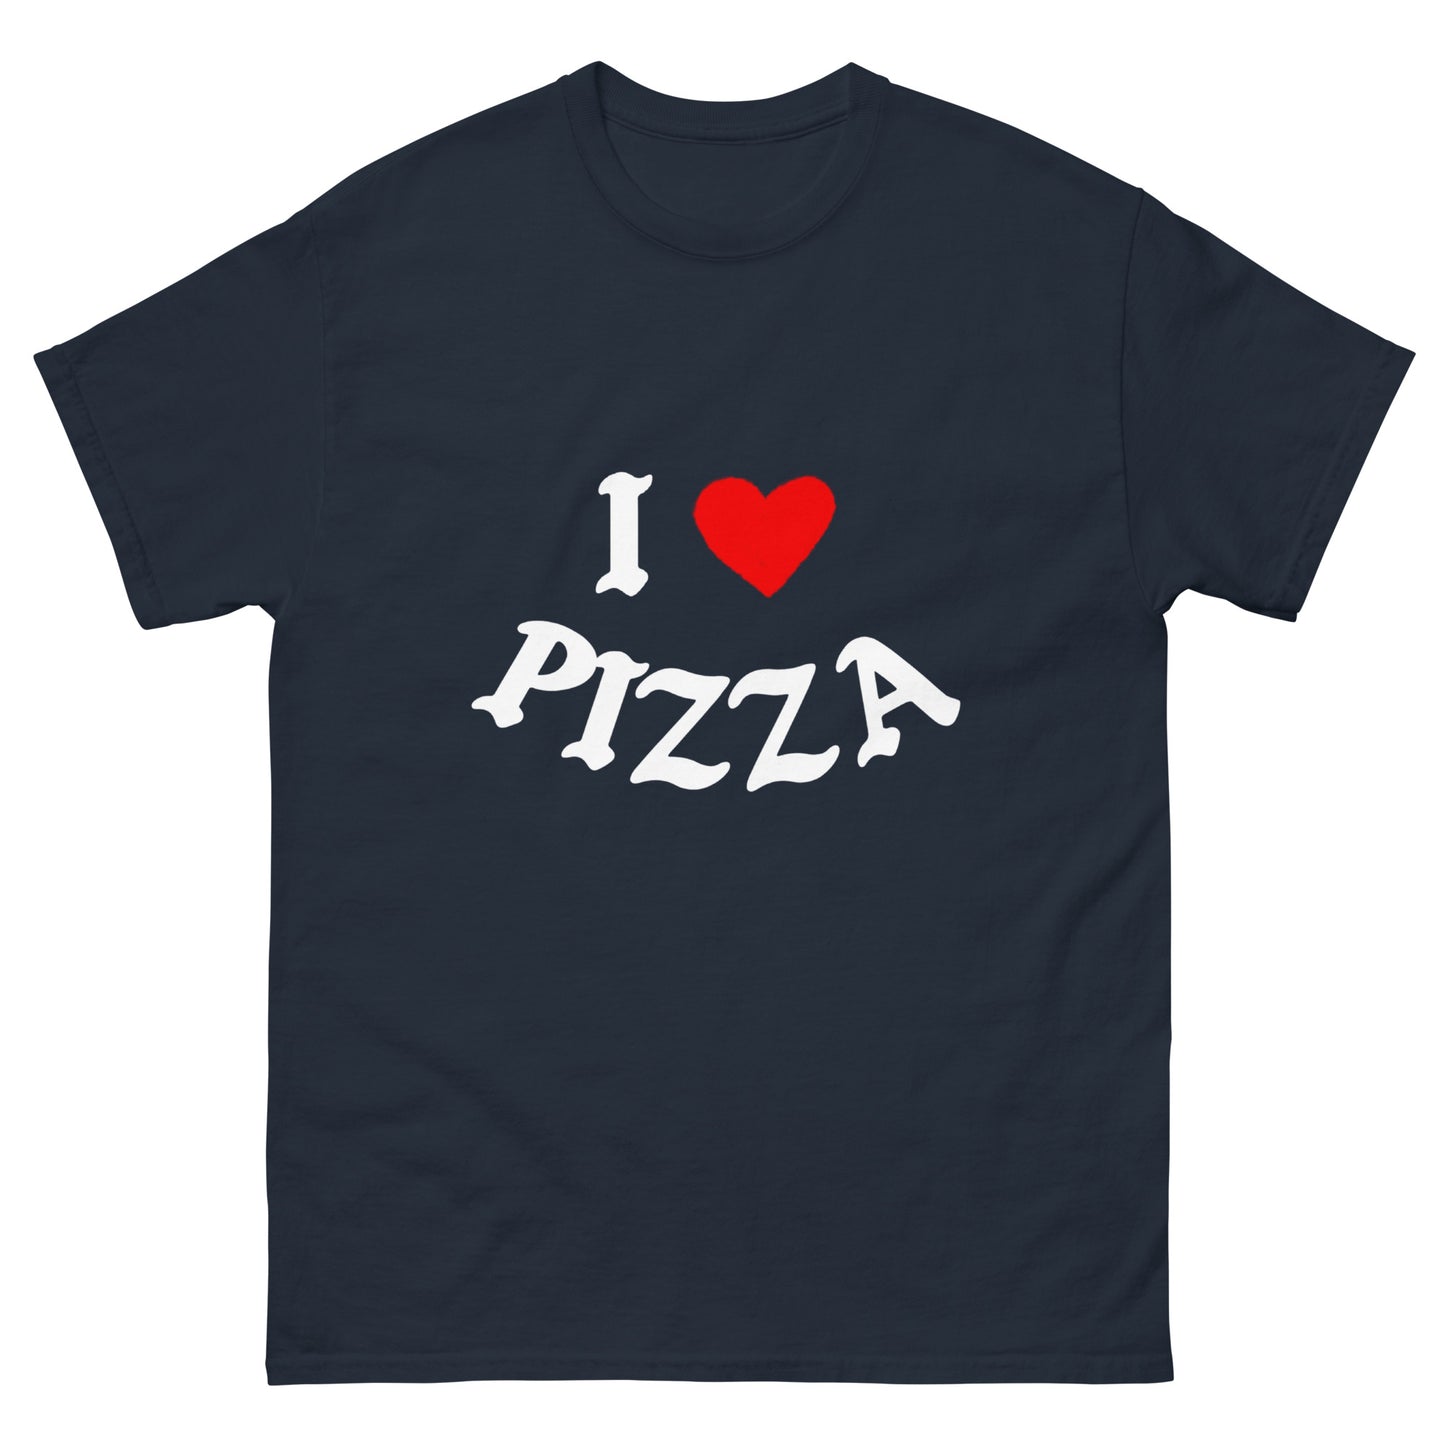 I love pizza t-shirt